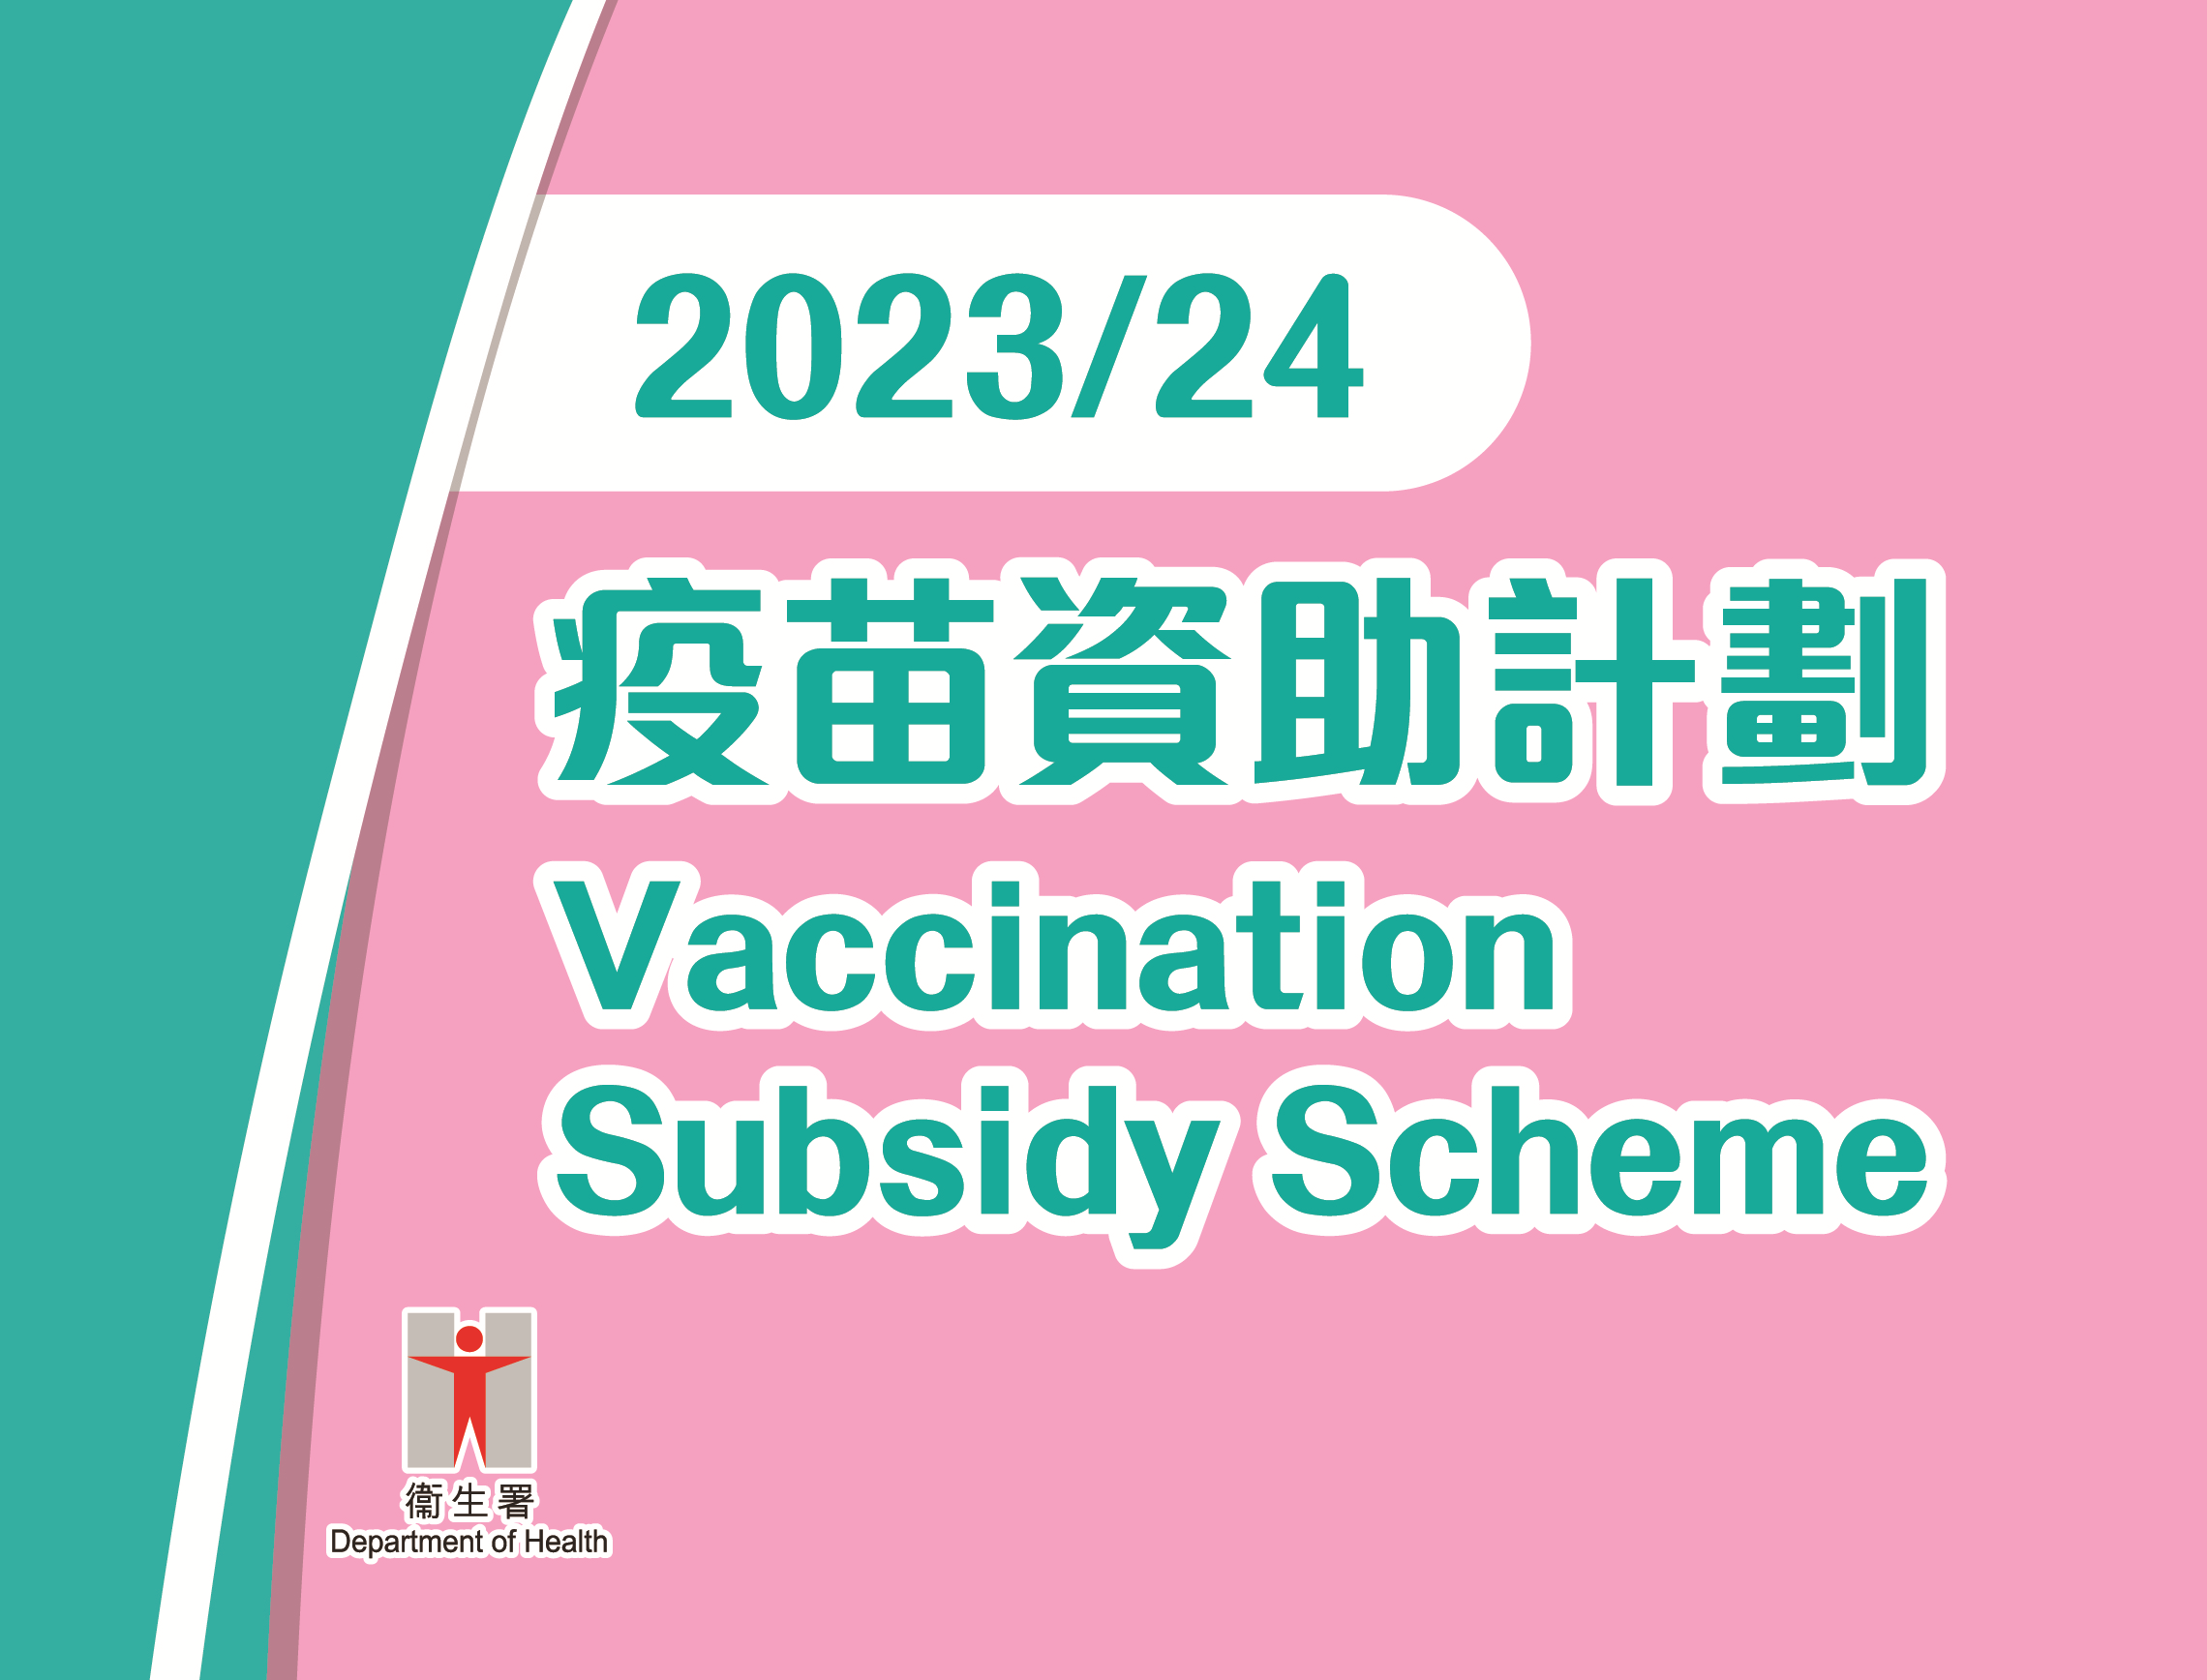 Vaccination Subsidy Scheme 2023/24